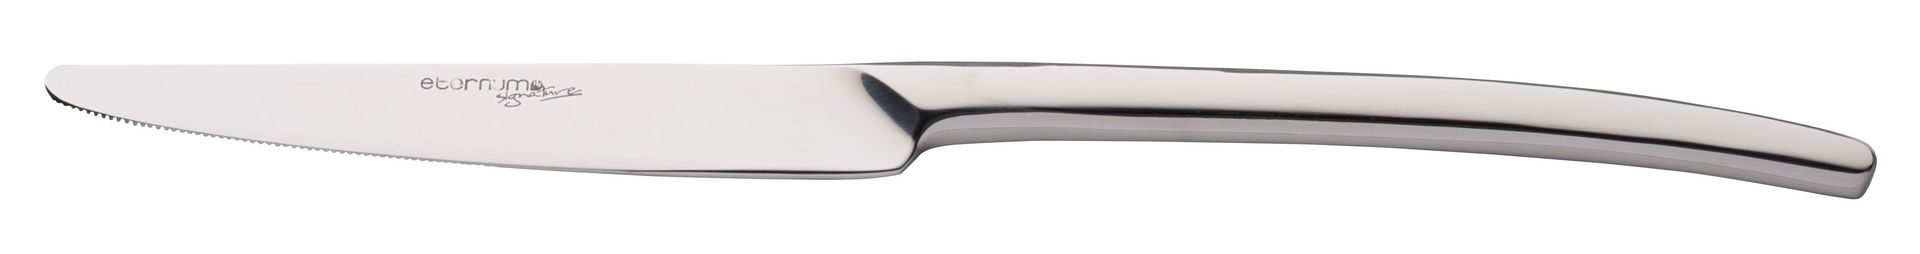 Alaska Table Knife - F29001-000000-B01012 (Pack of 12)